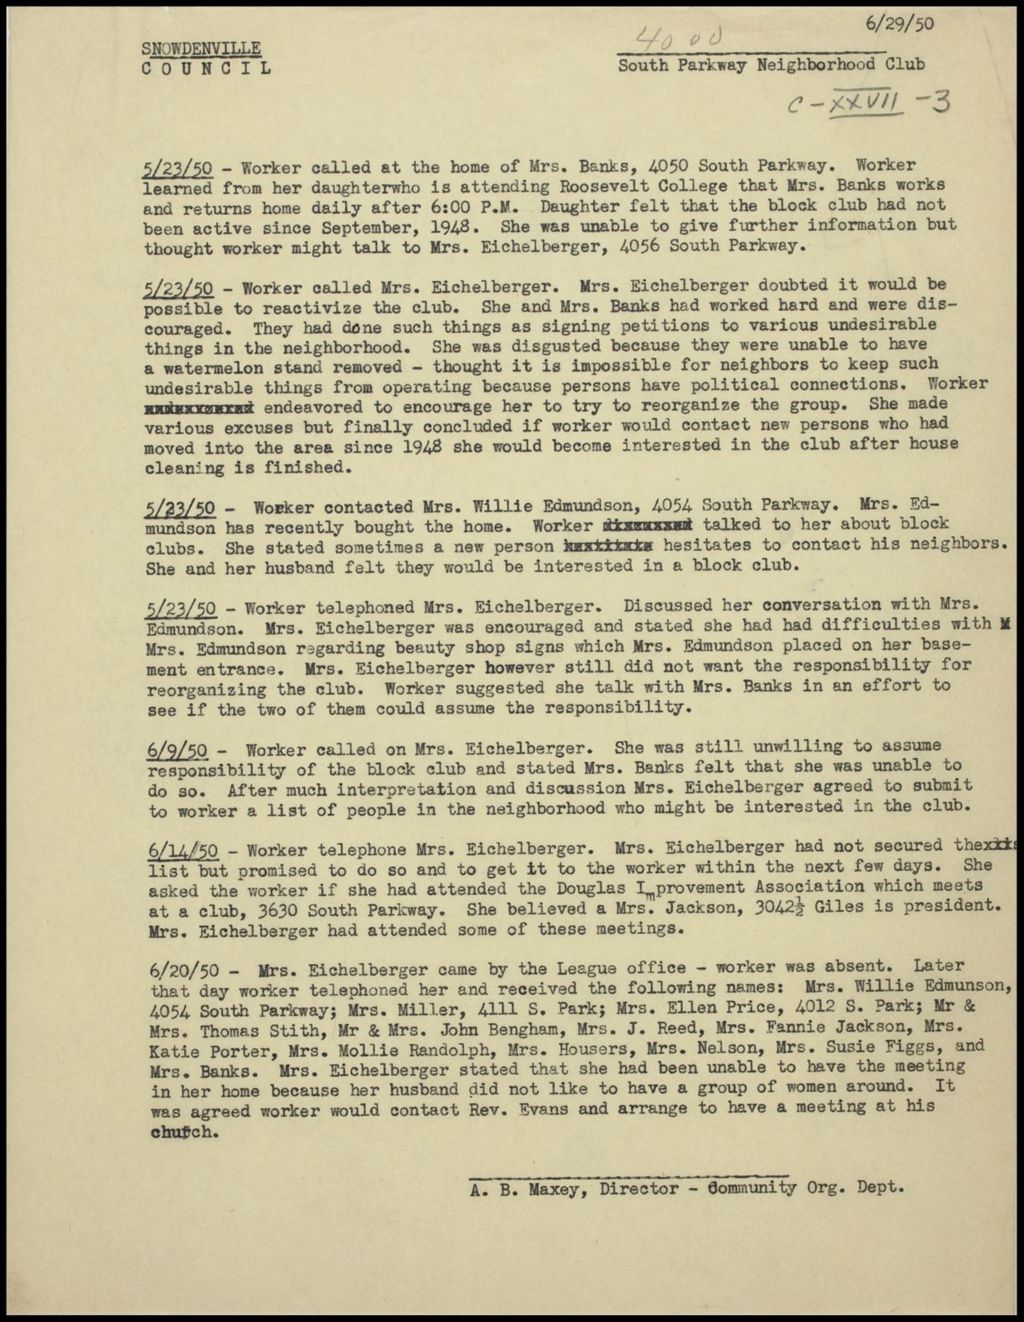 Block Club Reports - Snowdenville Council, 1950-1954 (Folder II-2302)